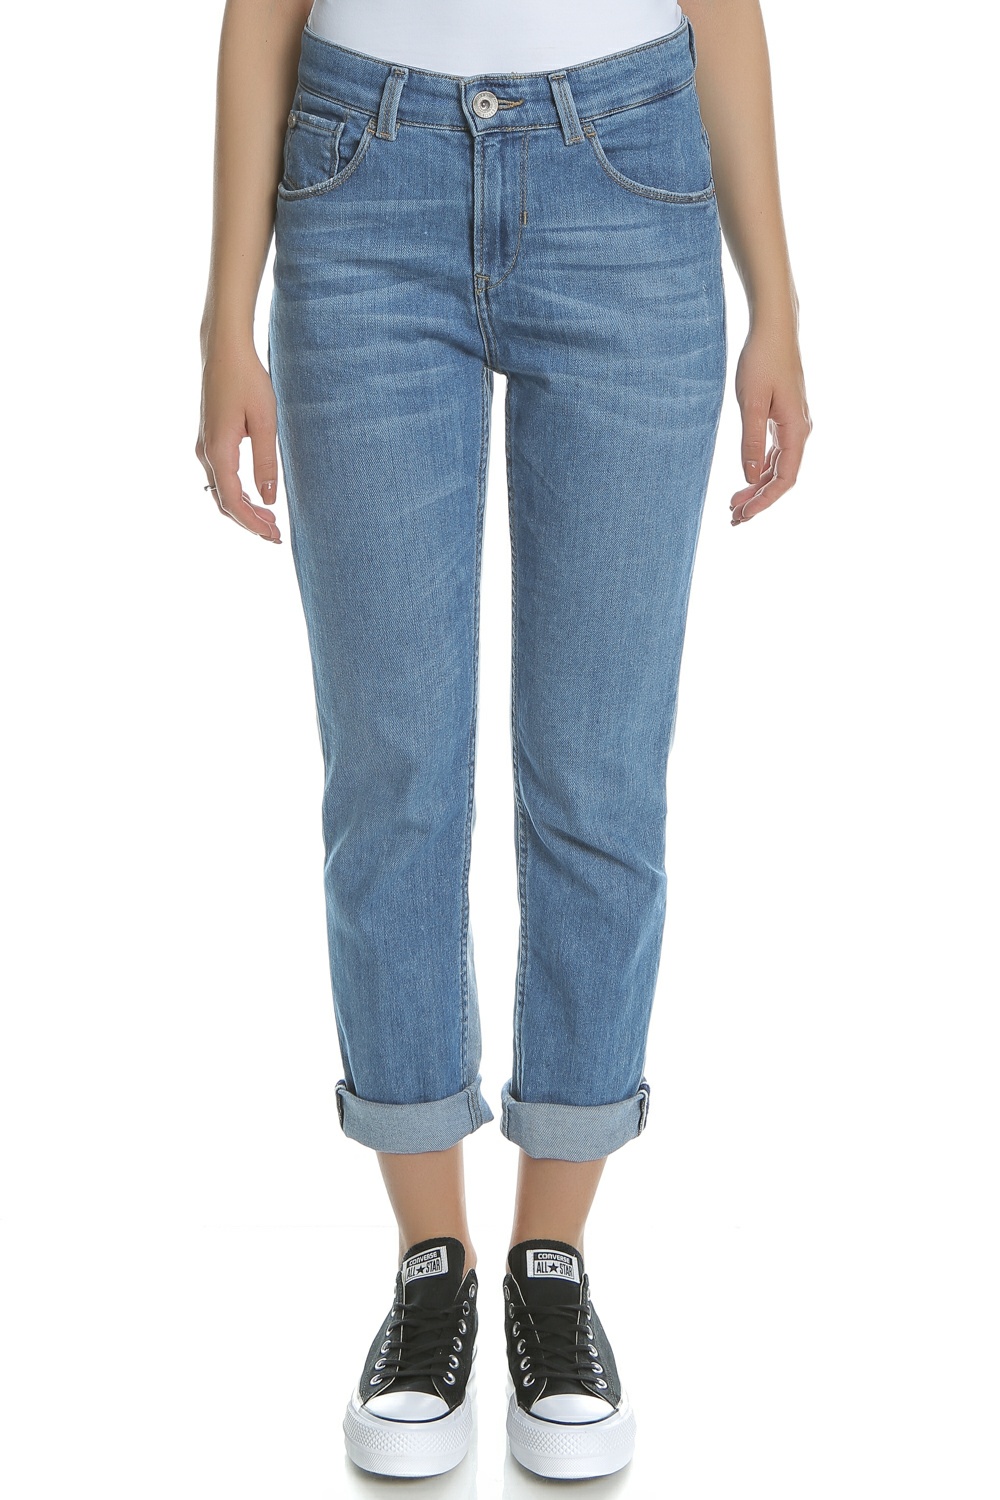 GARCIA JEANS – Γυναικειο τζιν παντελονι Garcia Jeans διχρωμο